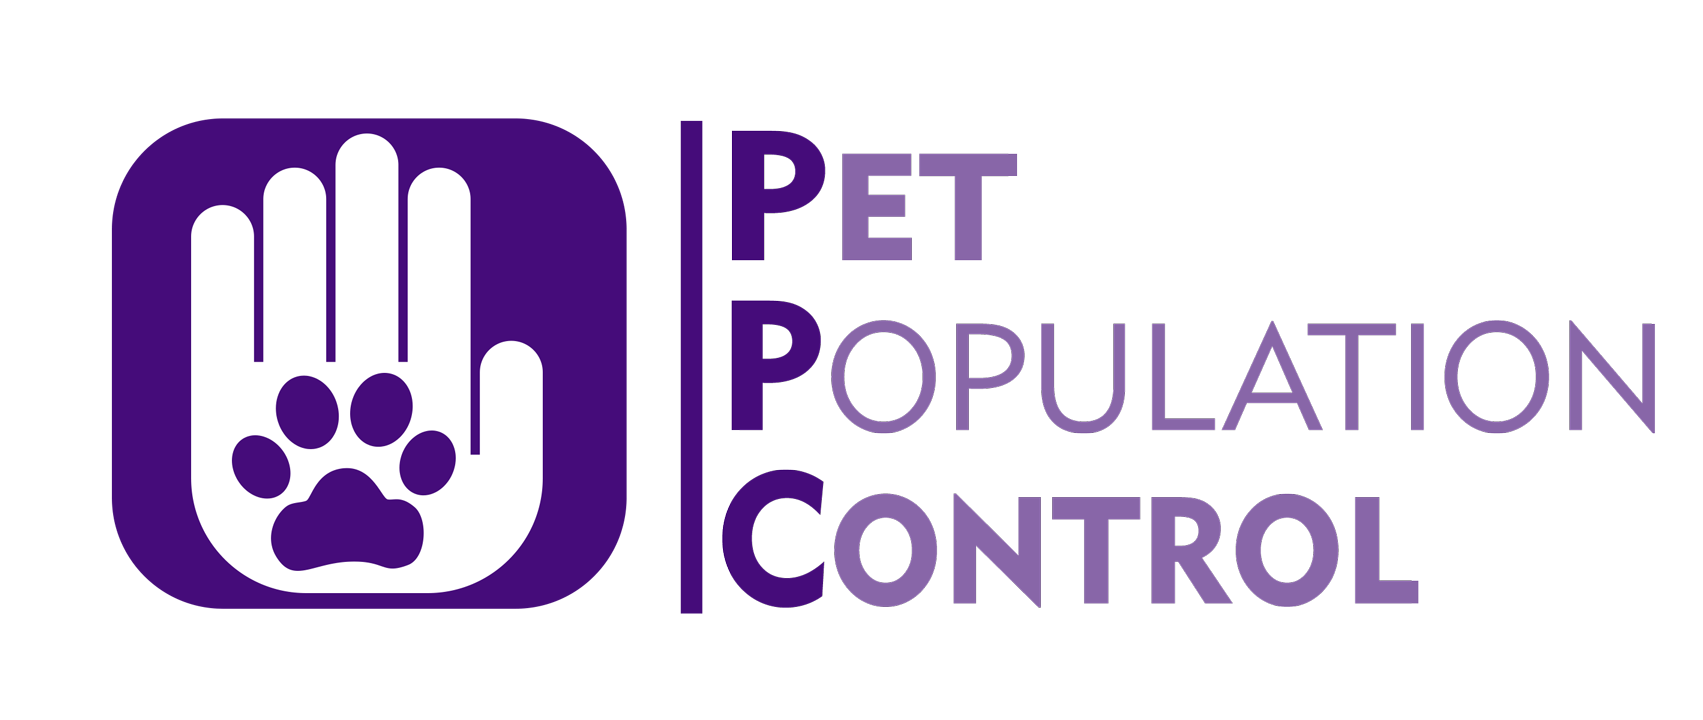 Pets Population Control